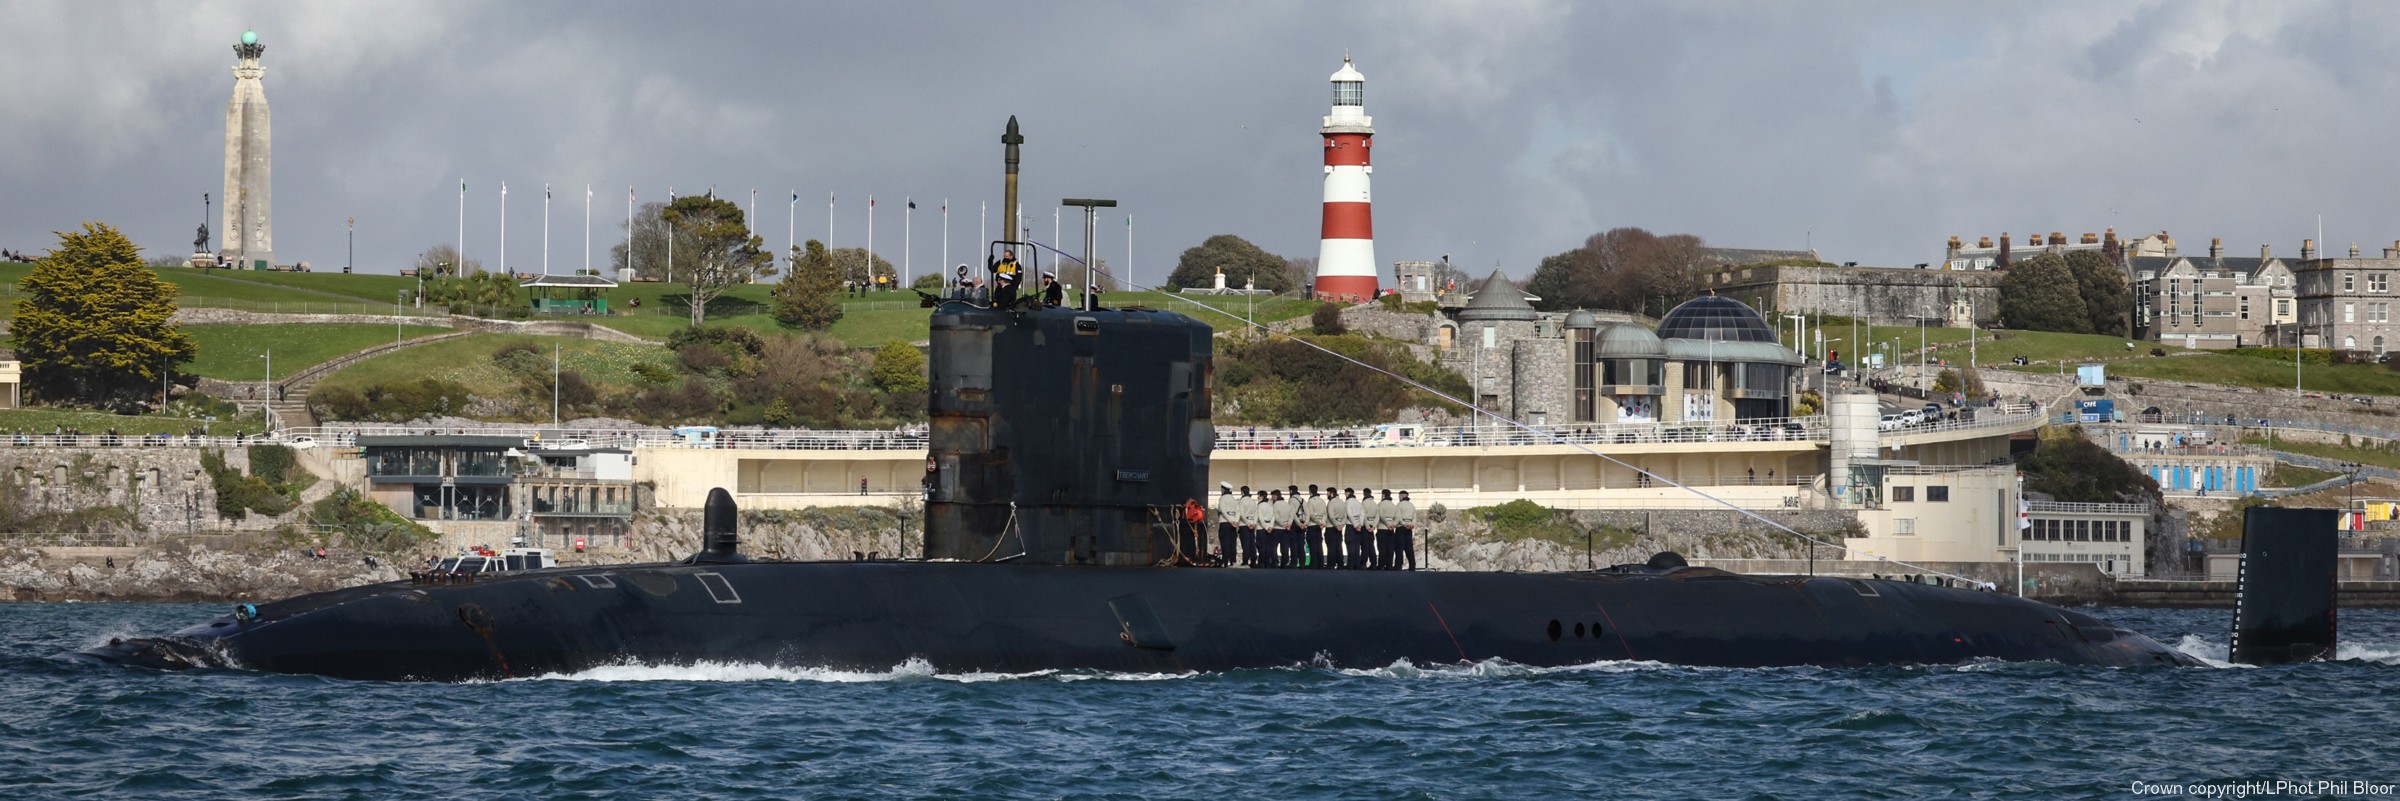 s91 hms trenchant trafalgar class attack submarine hunter killer royal navy 23